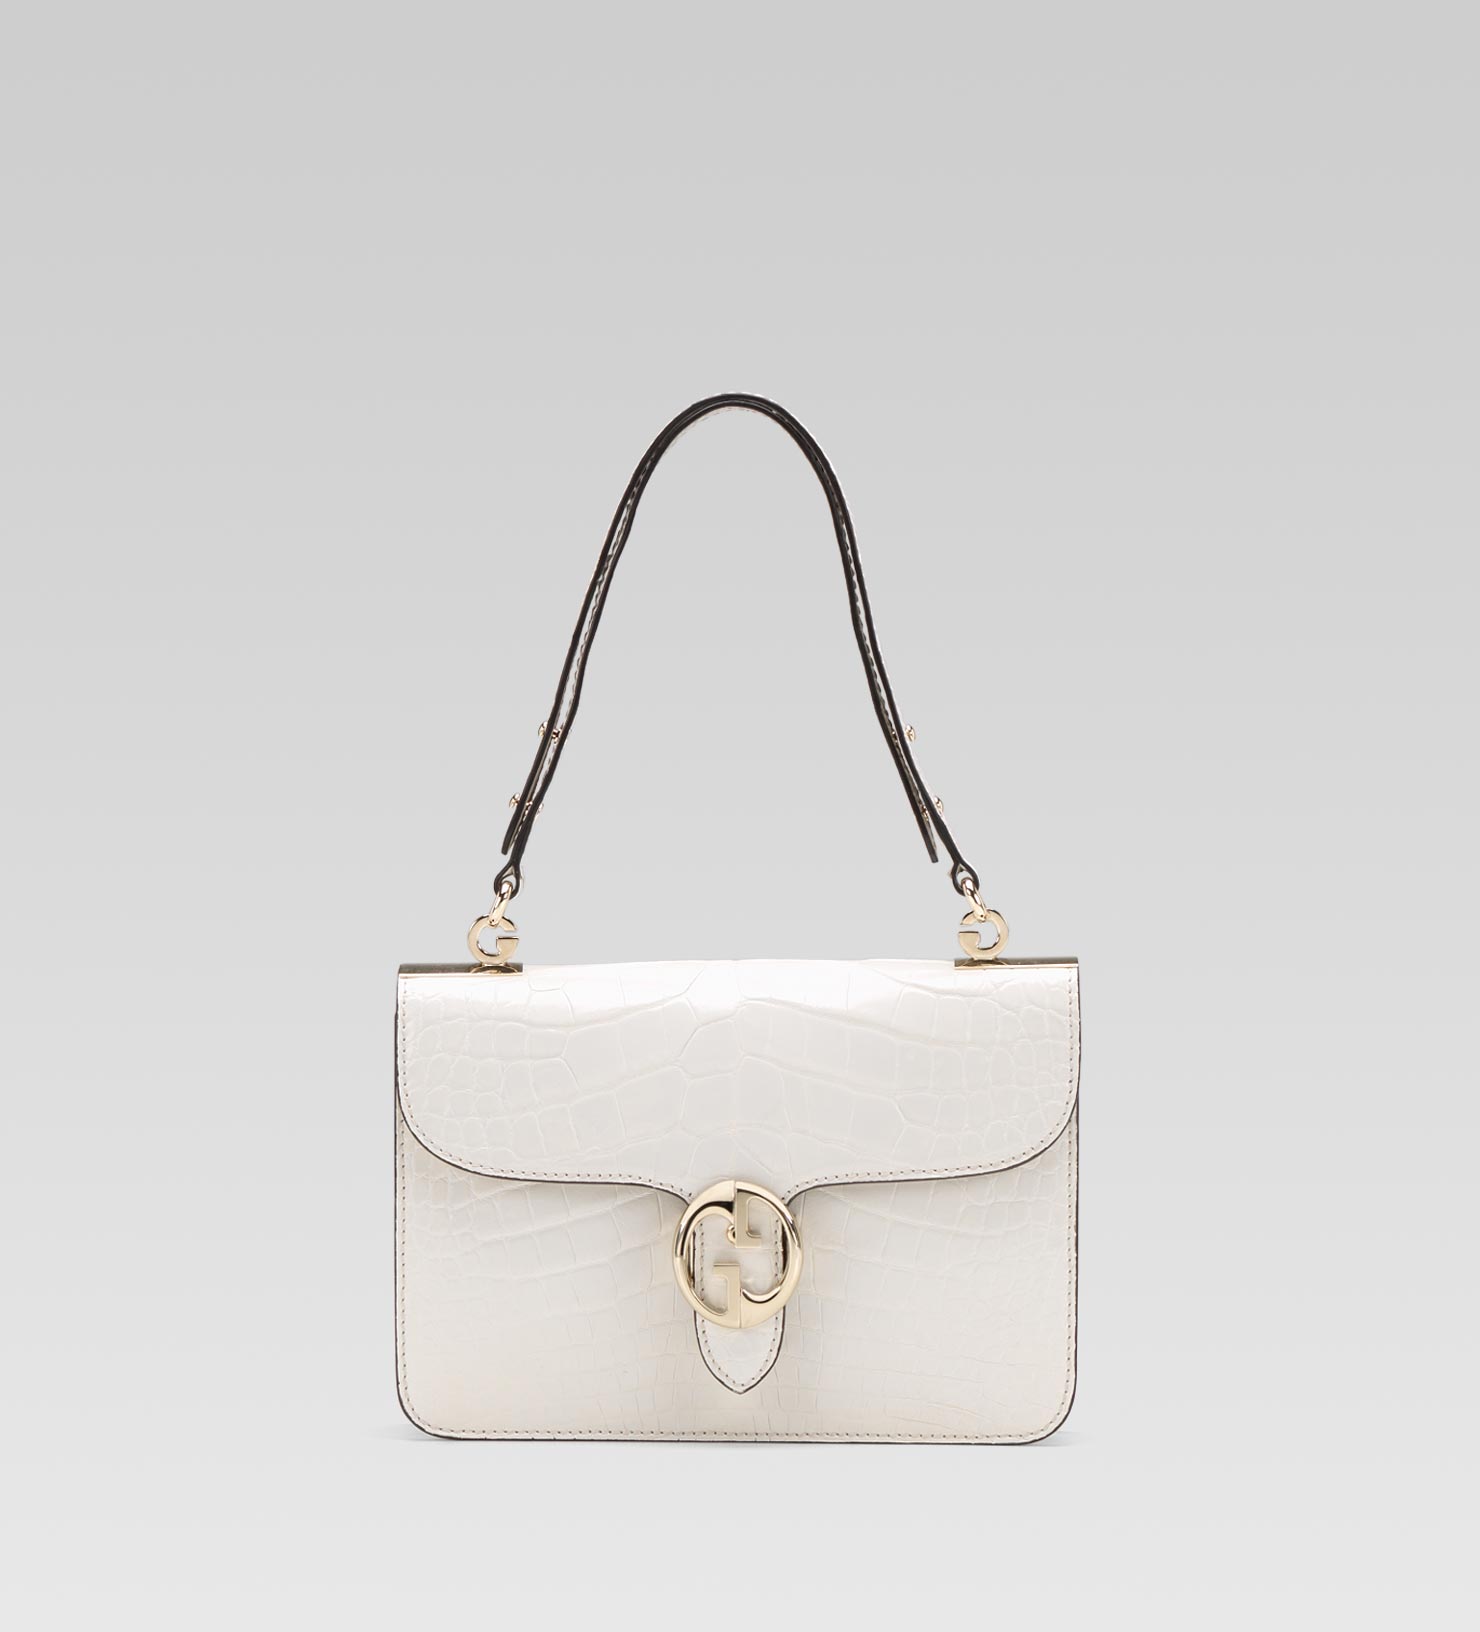 Lyst - Gucci Off White Crocodile Top Handle Bag in White